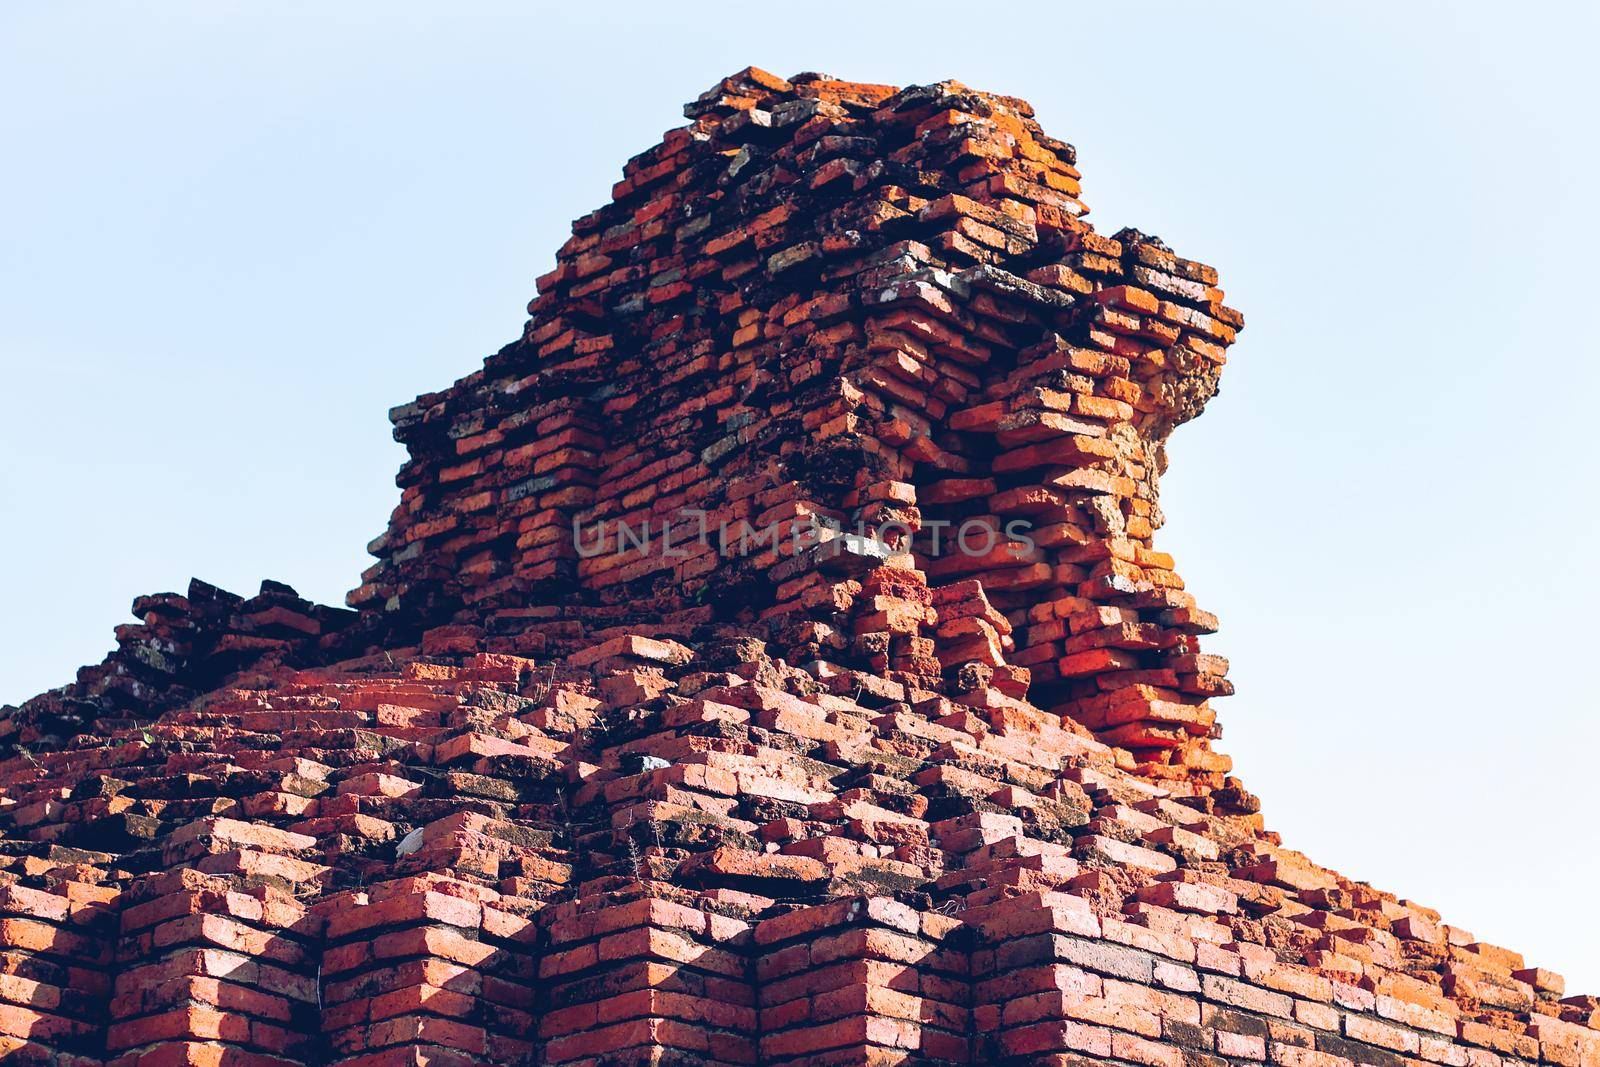 A closer look at the ruins of Wat Chaiwatthanaram by Sonnet15